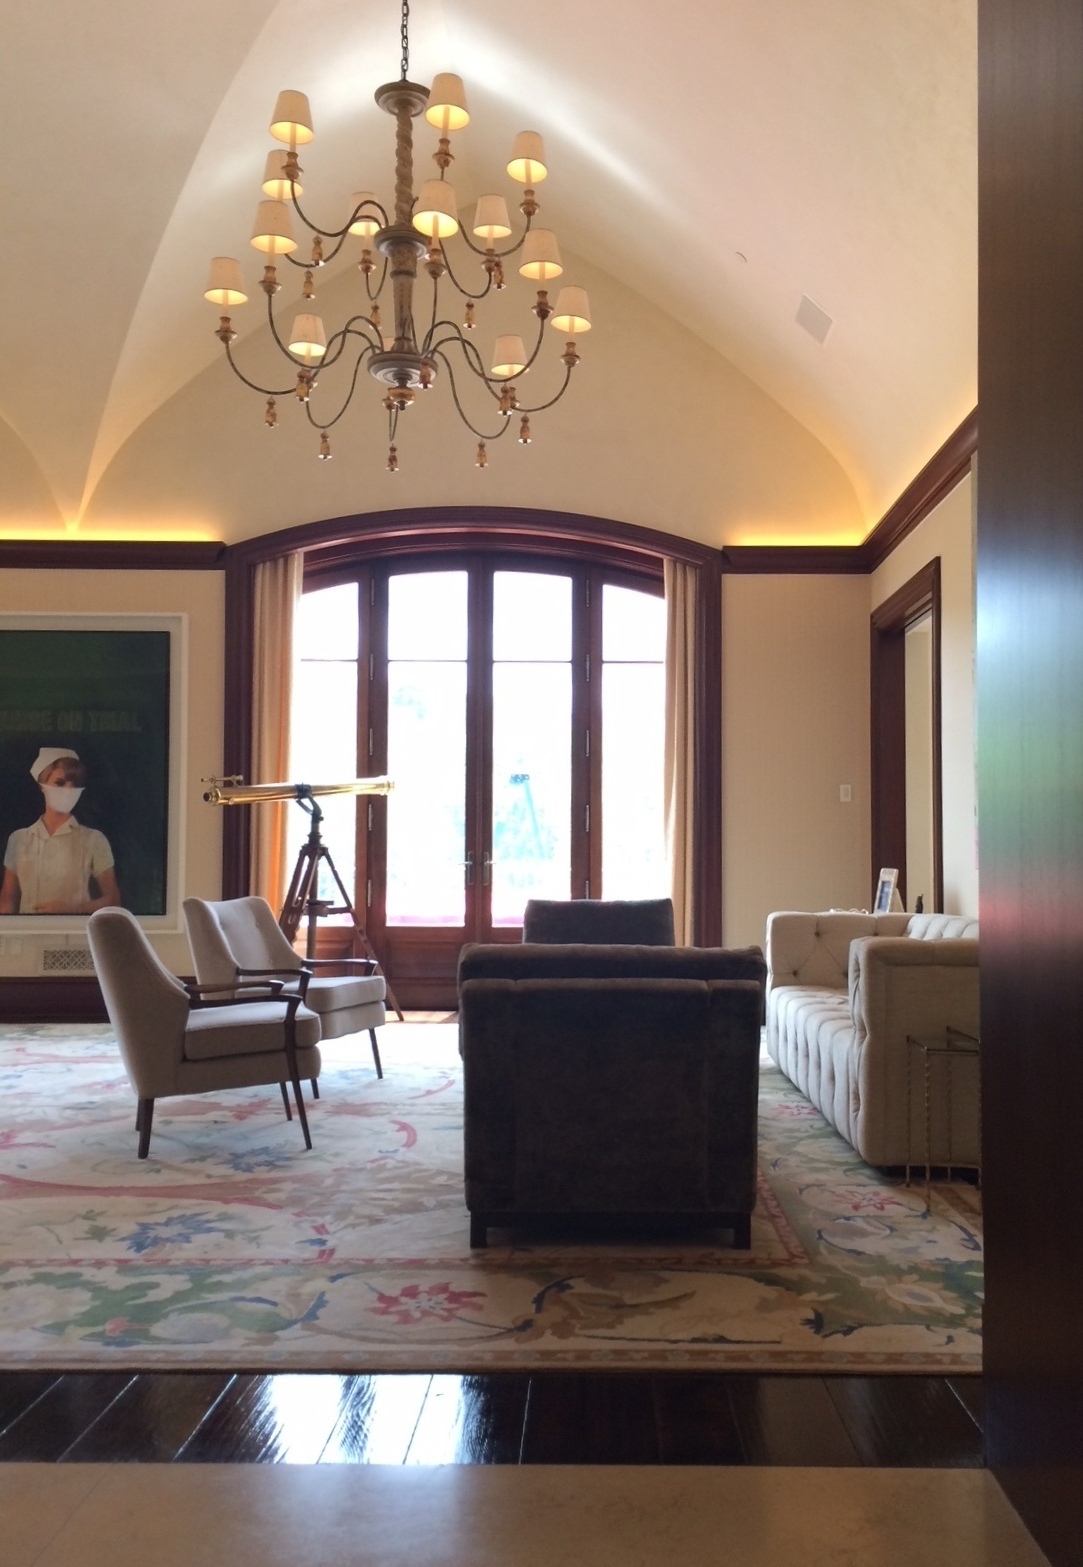 Colorado Mountain Estate Interior lounge with chandelier